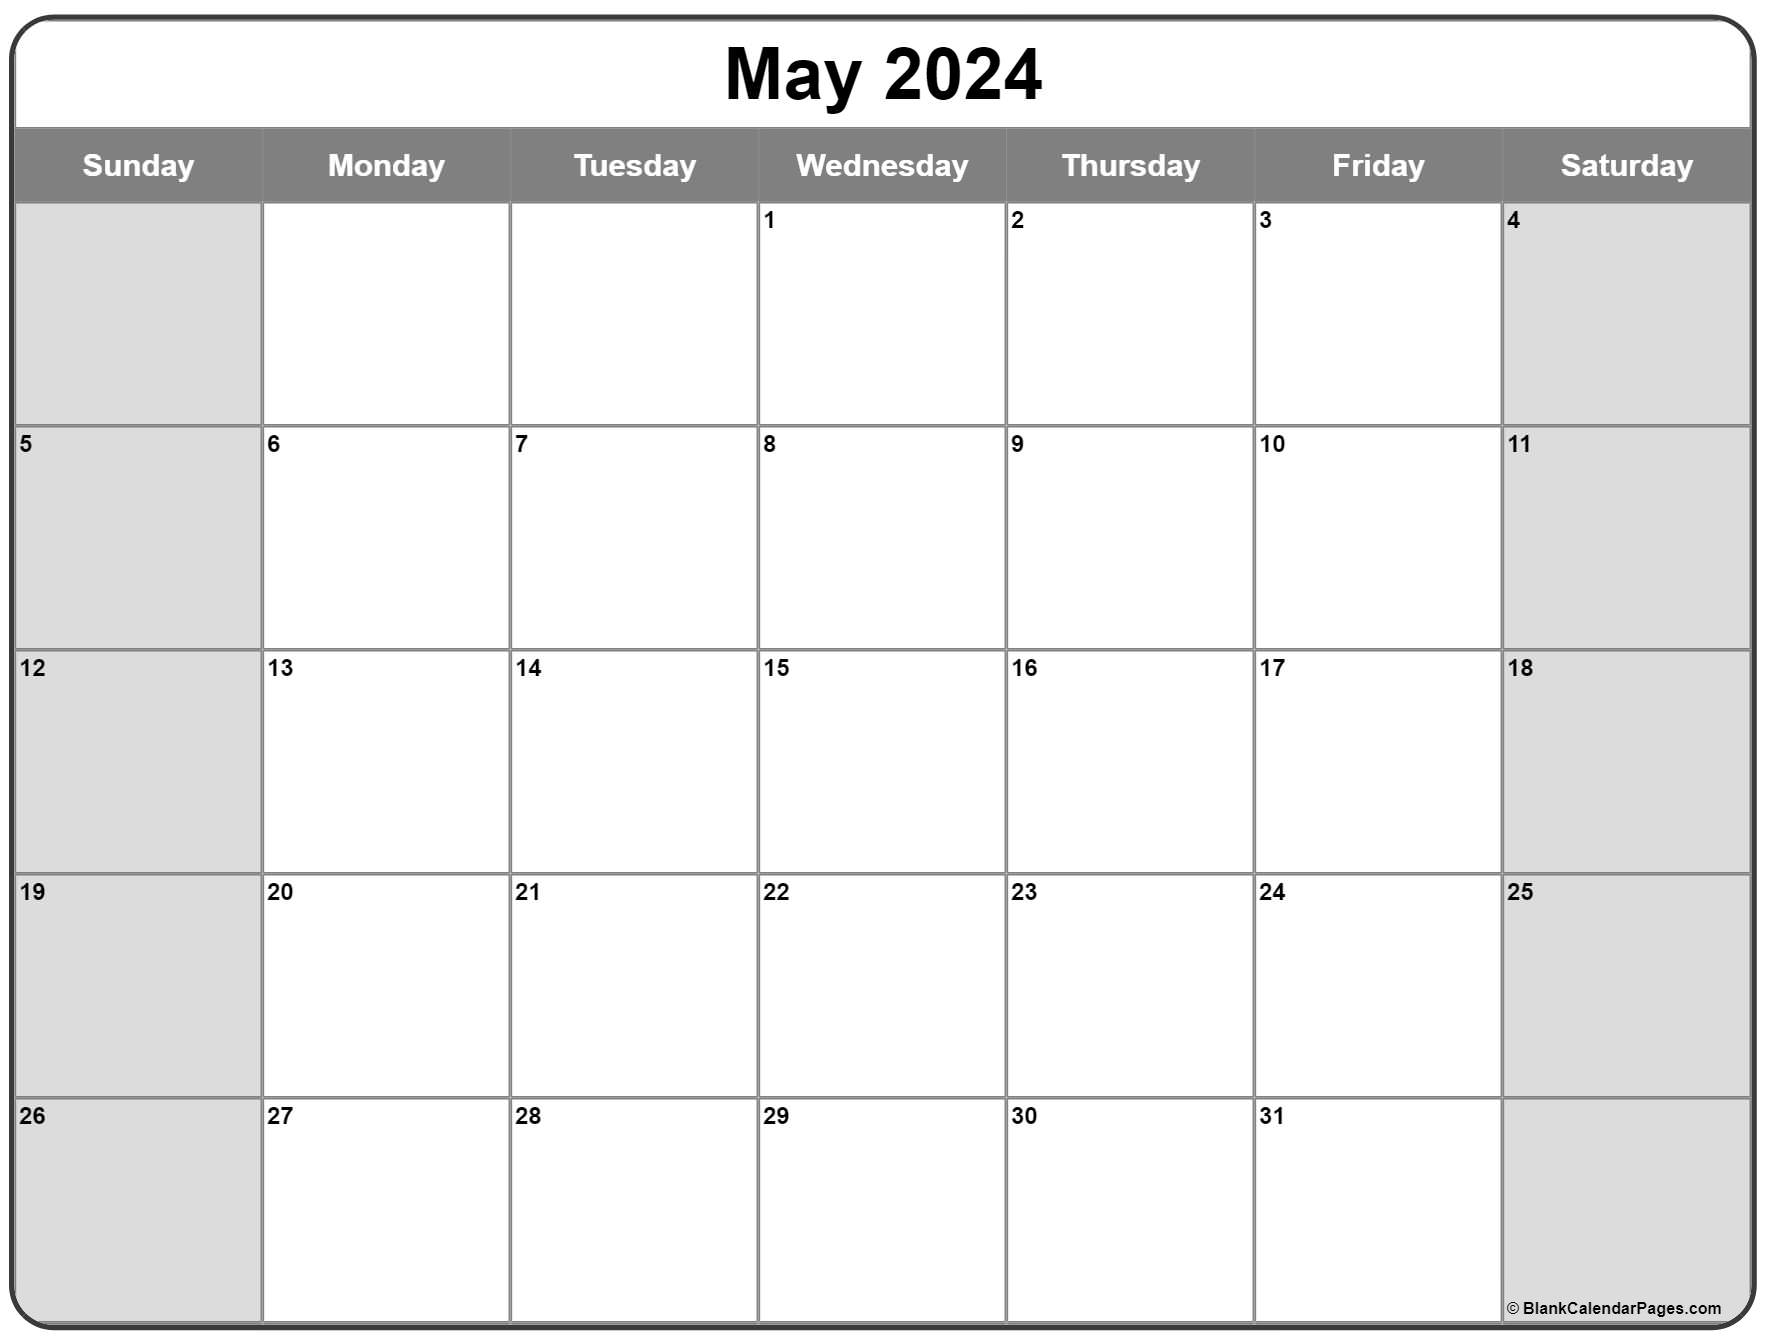 May 2024 calendar | free printable calendar